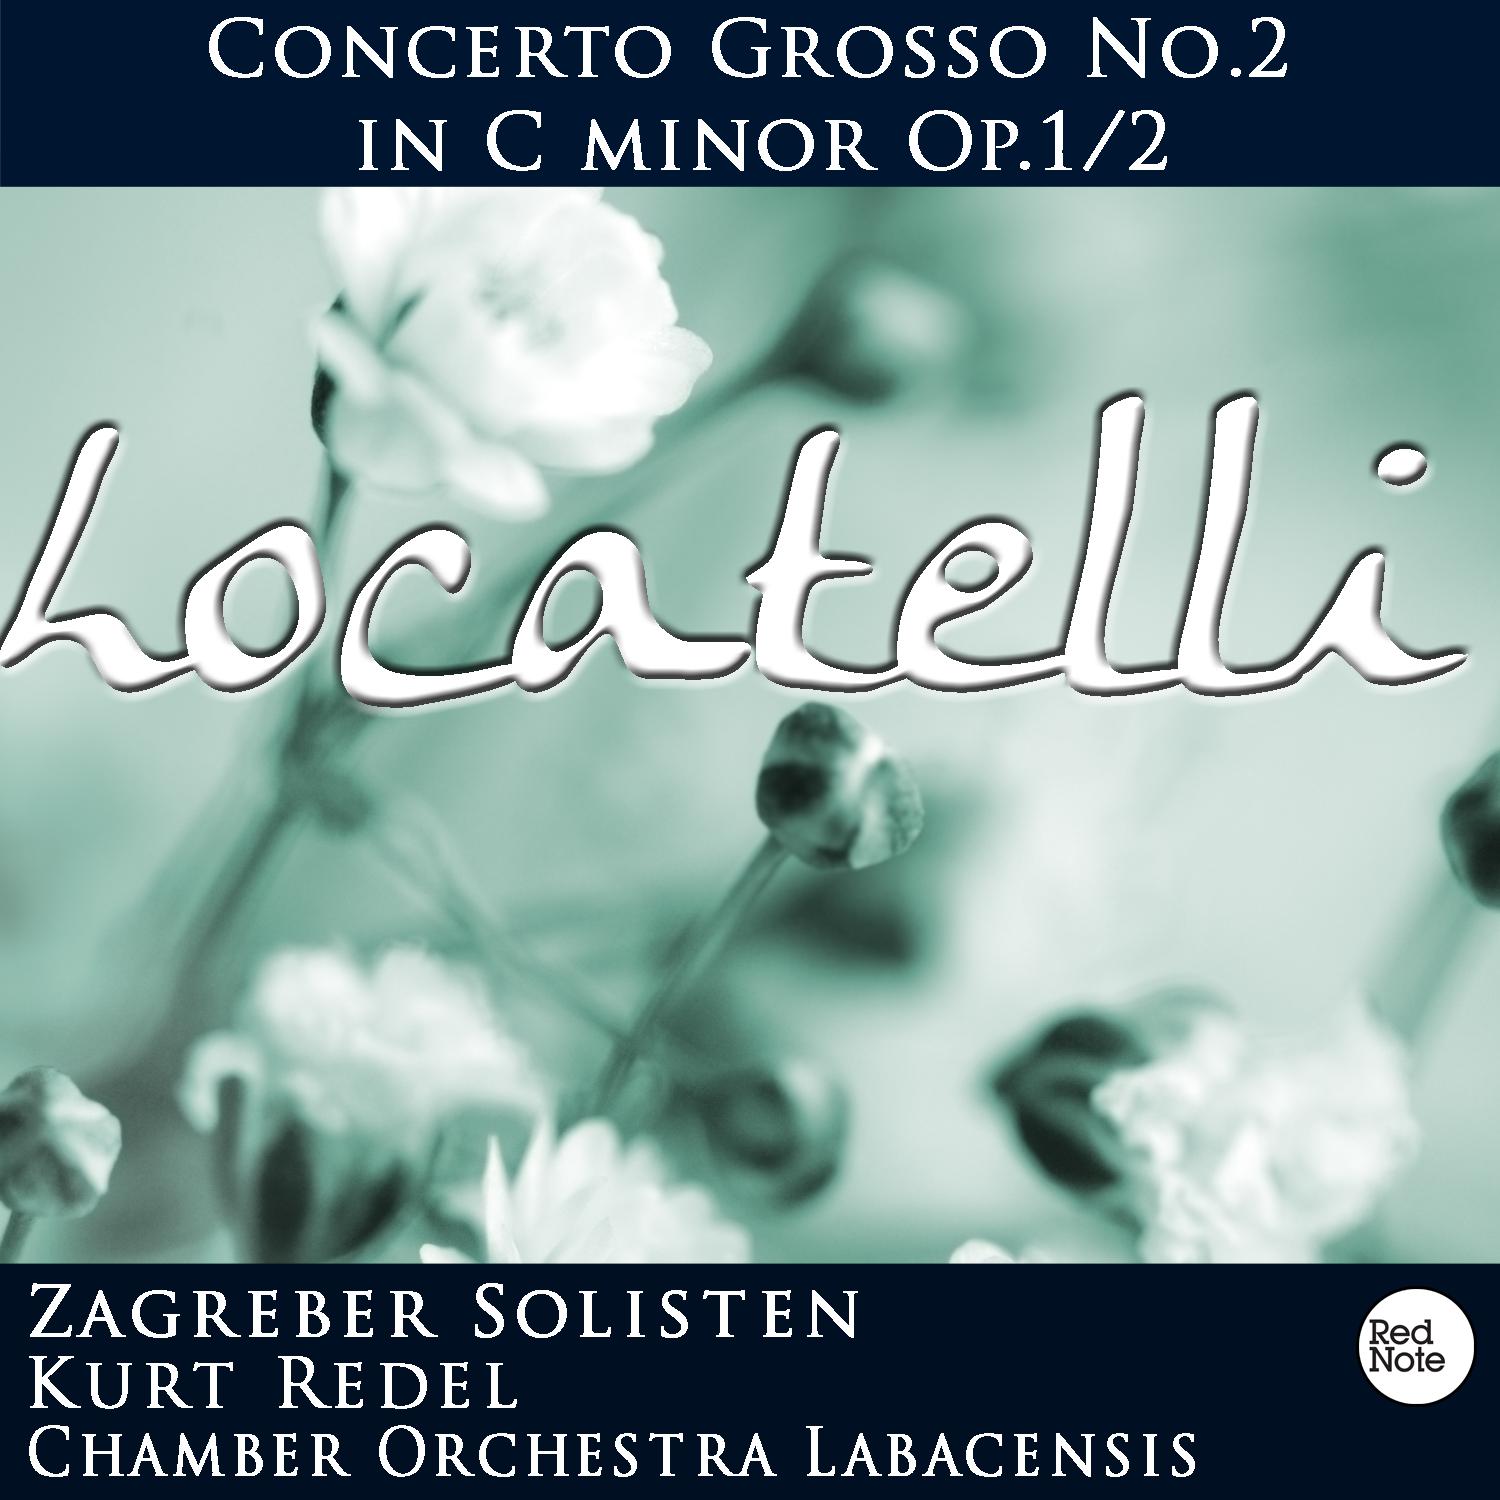 Concerto Grosso No.2 in C Minor, Op.1/2: I. Adagio - Allegro